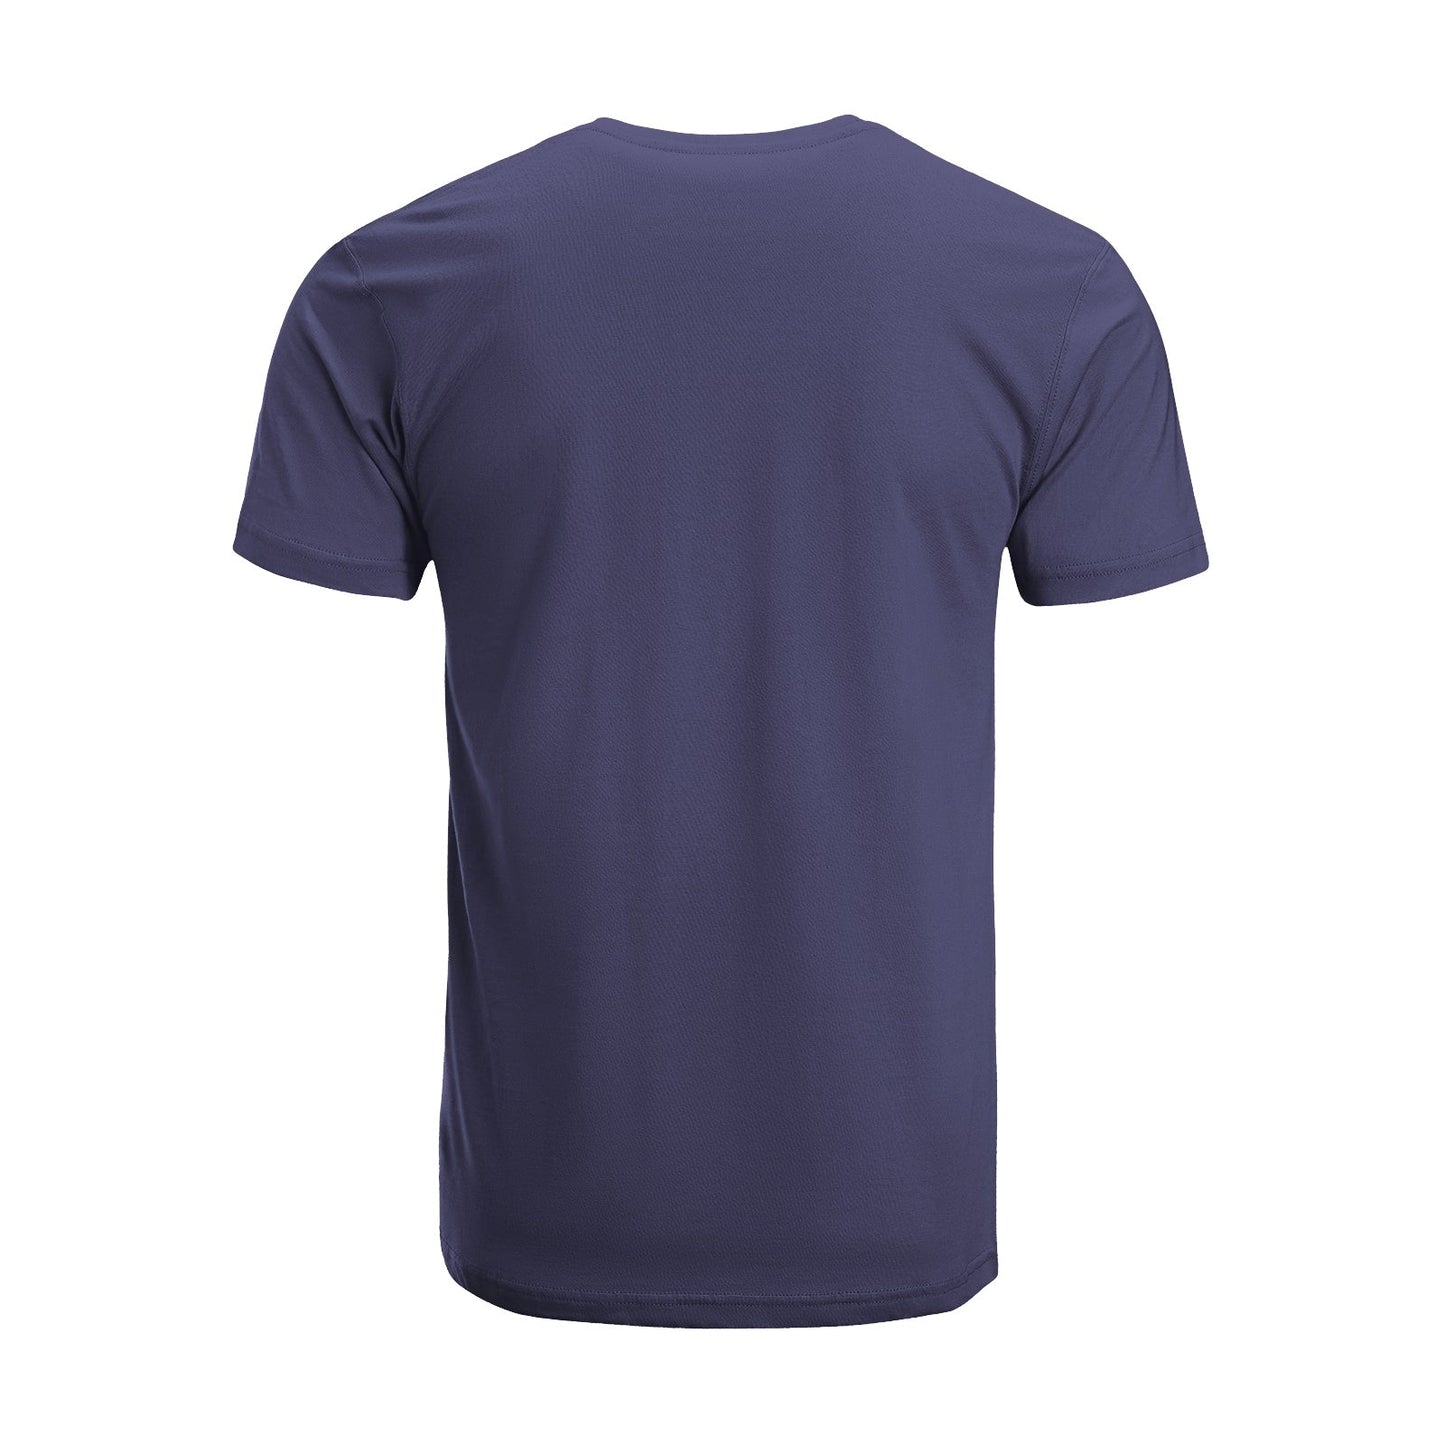 Unisex Short Sleeve Crew Neck Cotton Jersey T-Shirt MOM 38